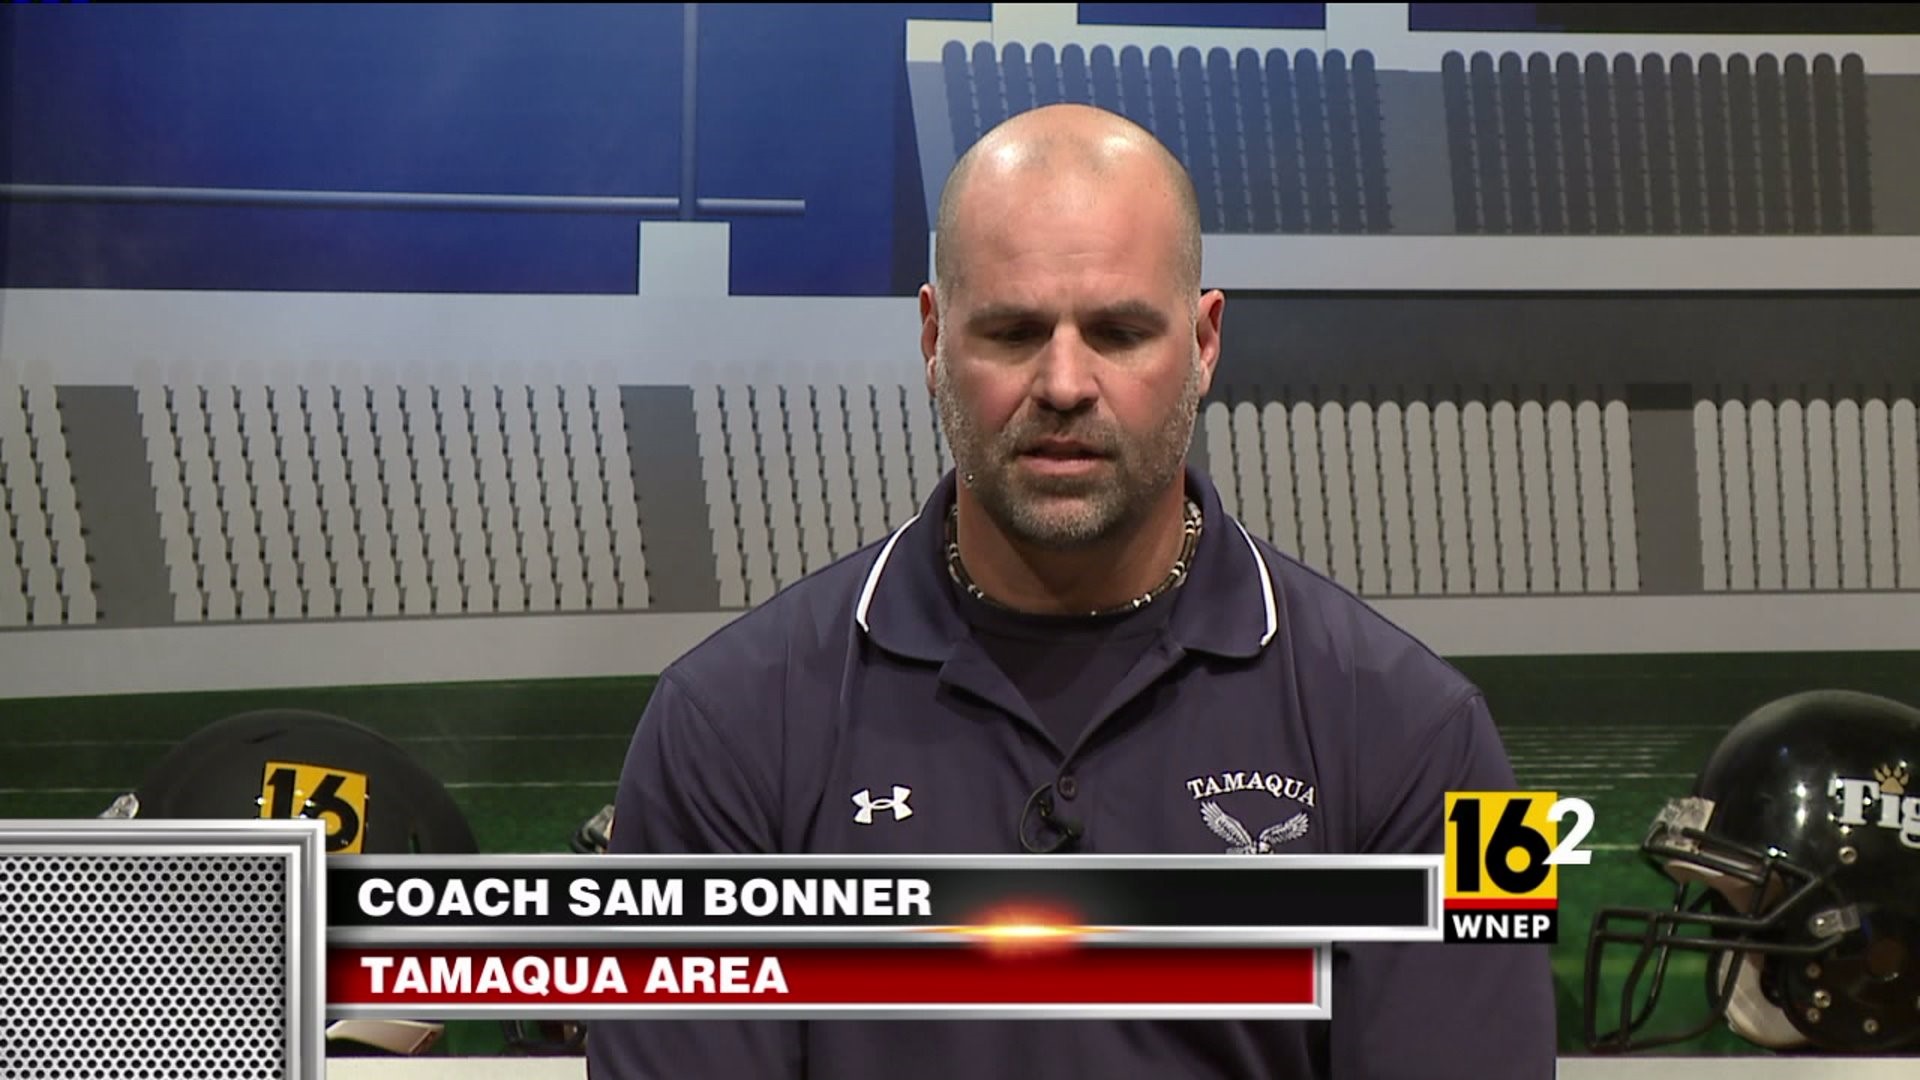 Tamaqua Area Head Coach Sam Bonner